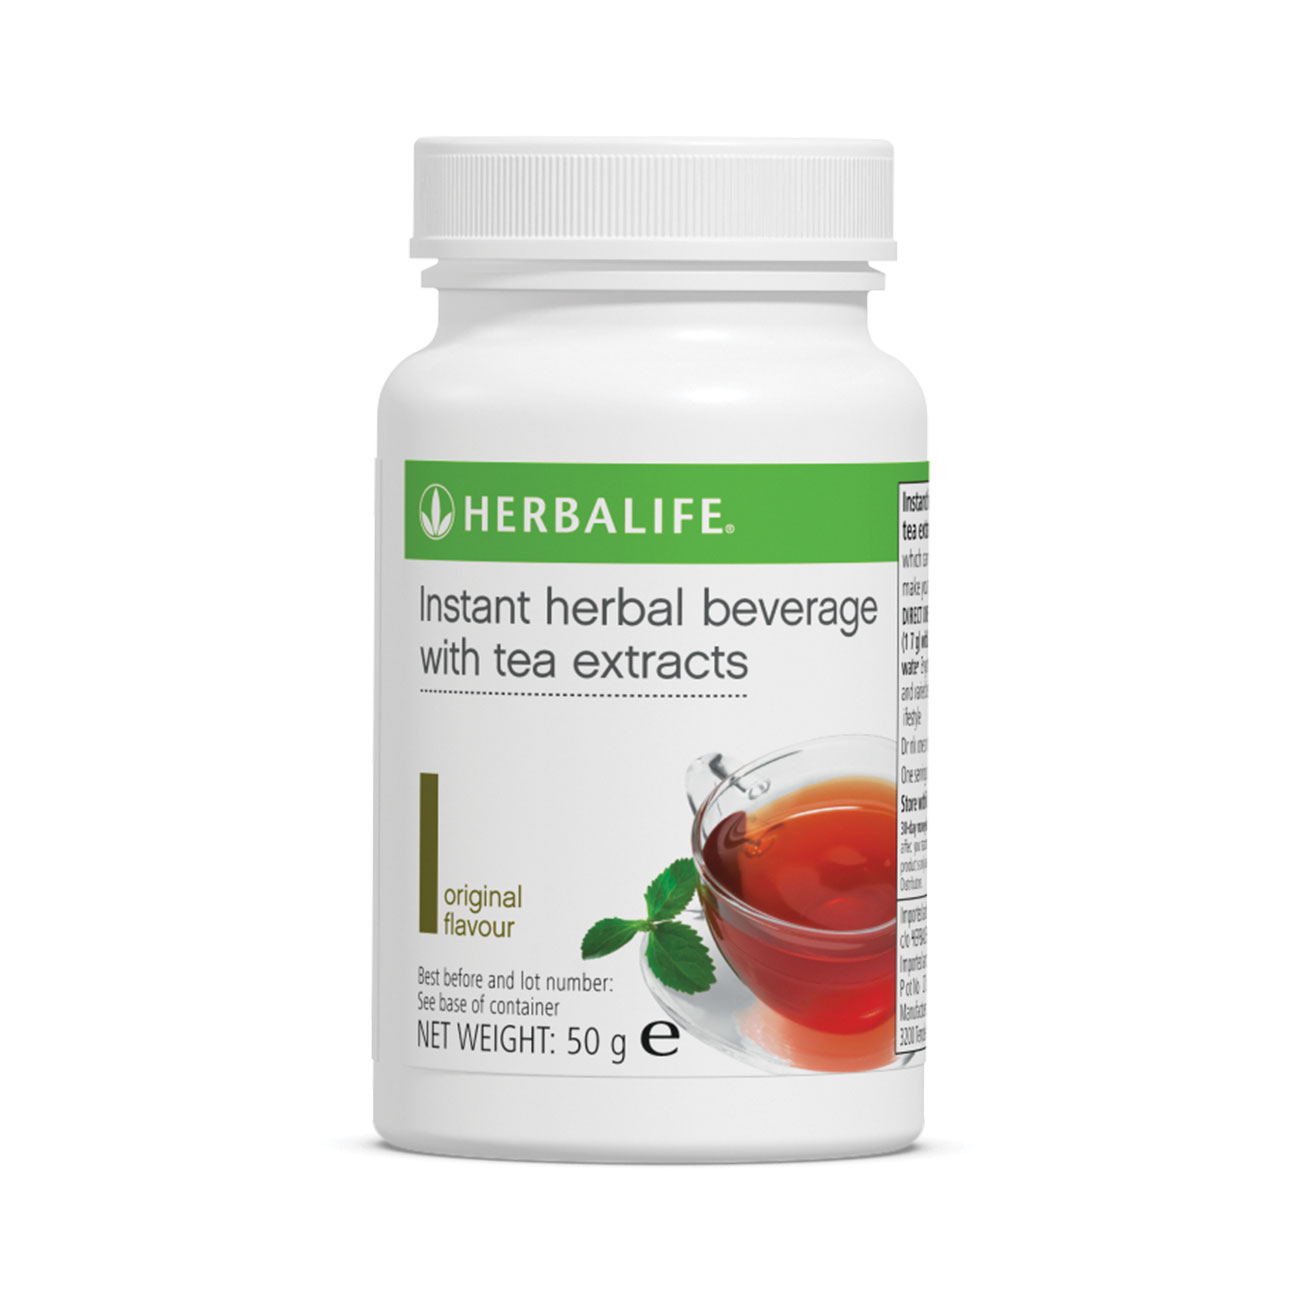 Instant Herbal Beverage Original product shot